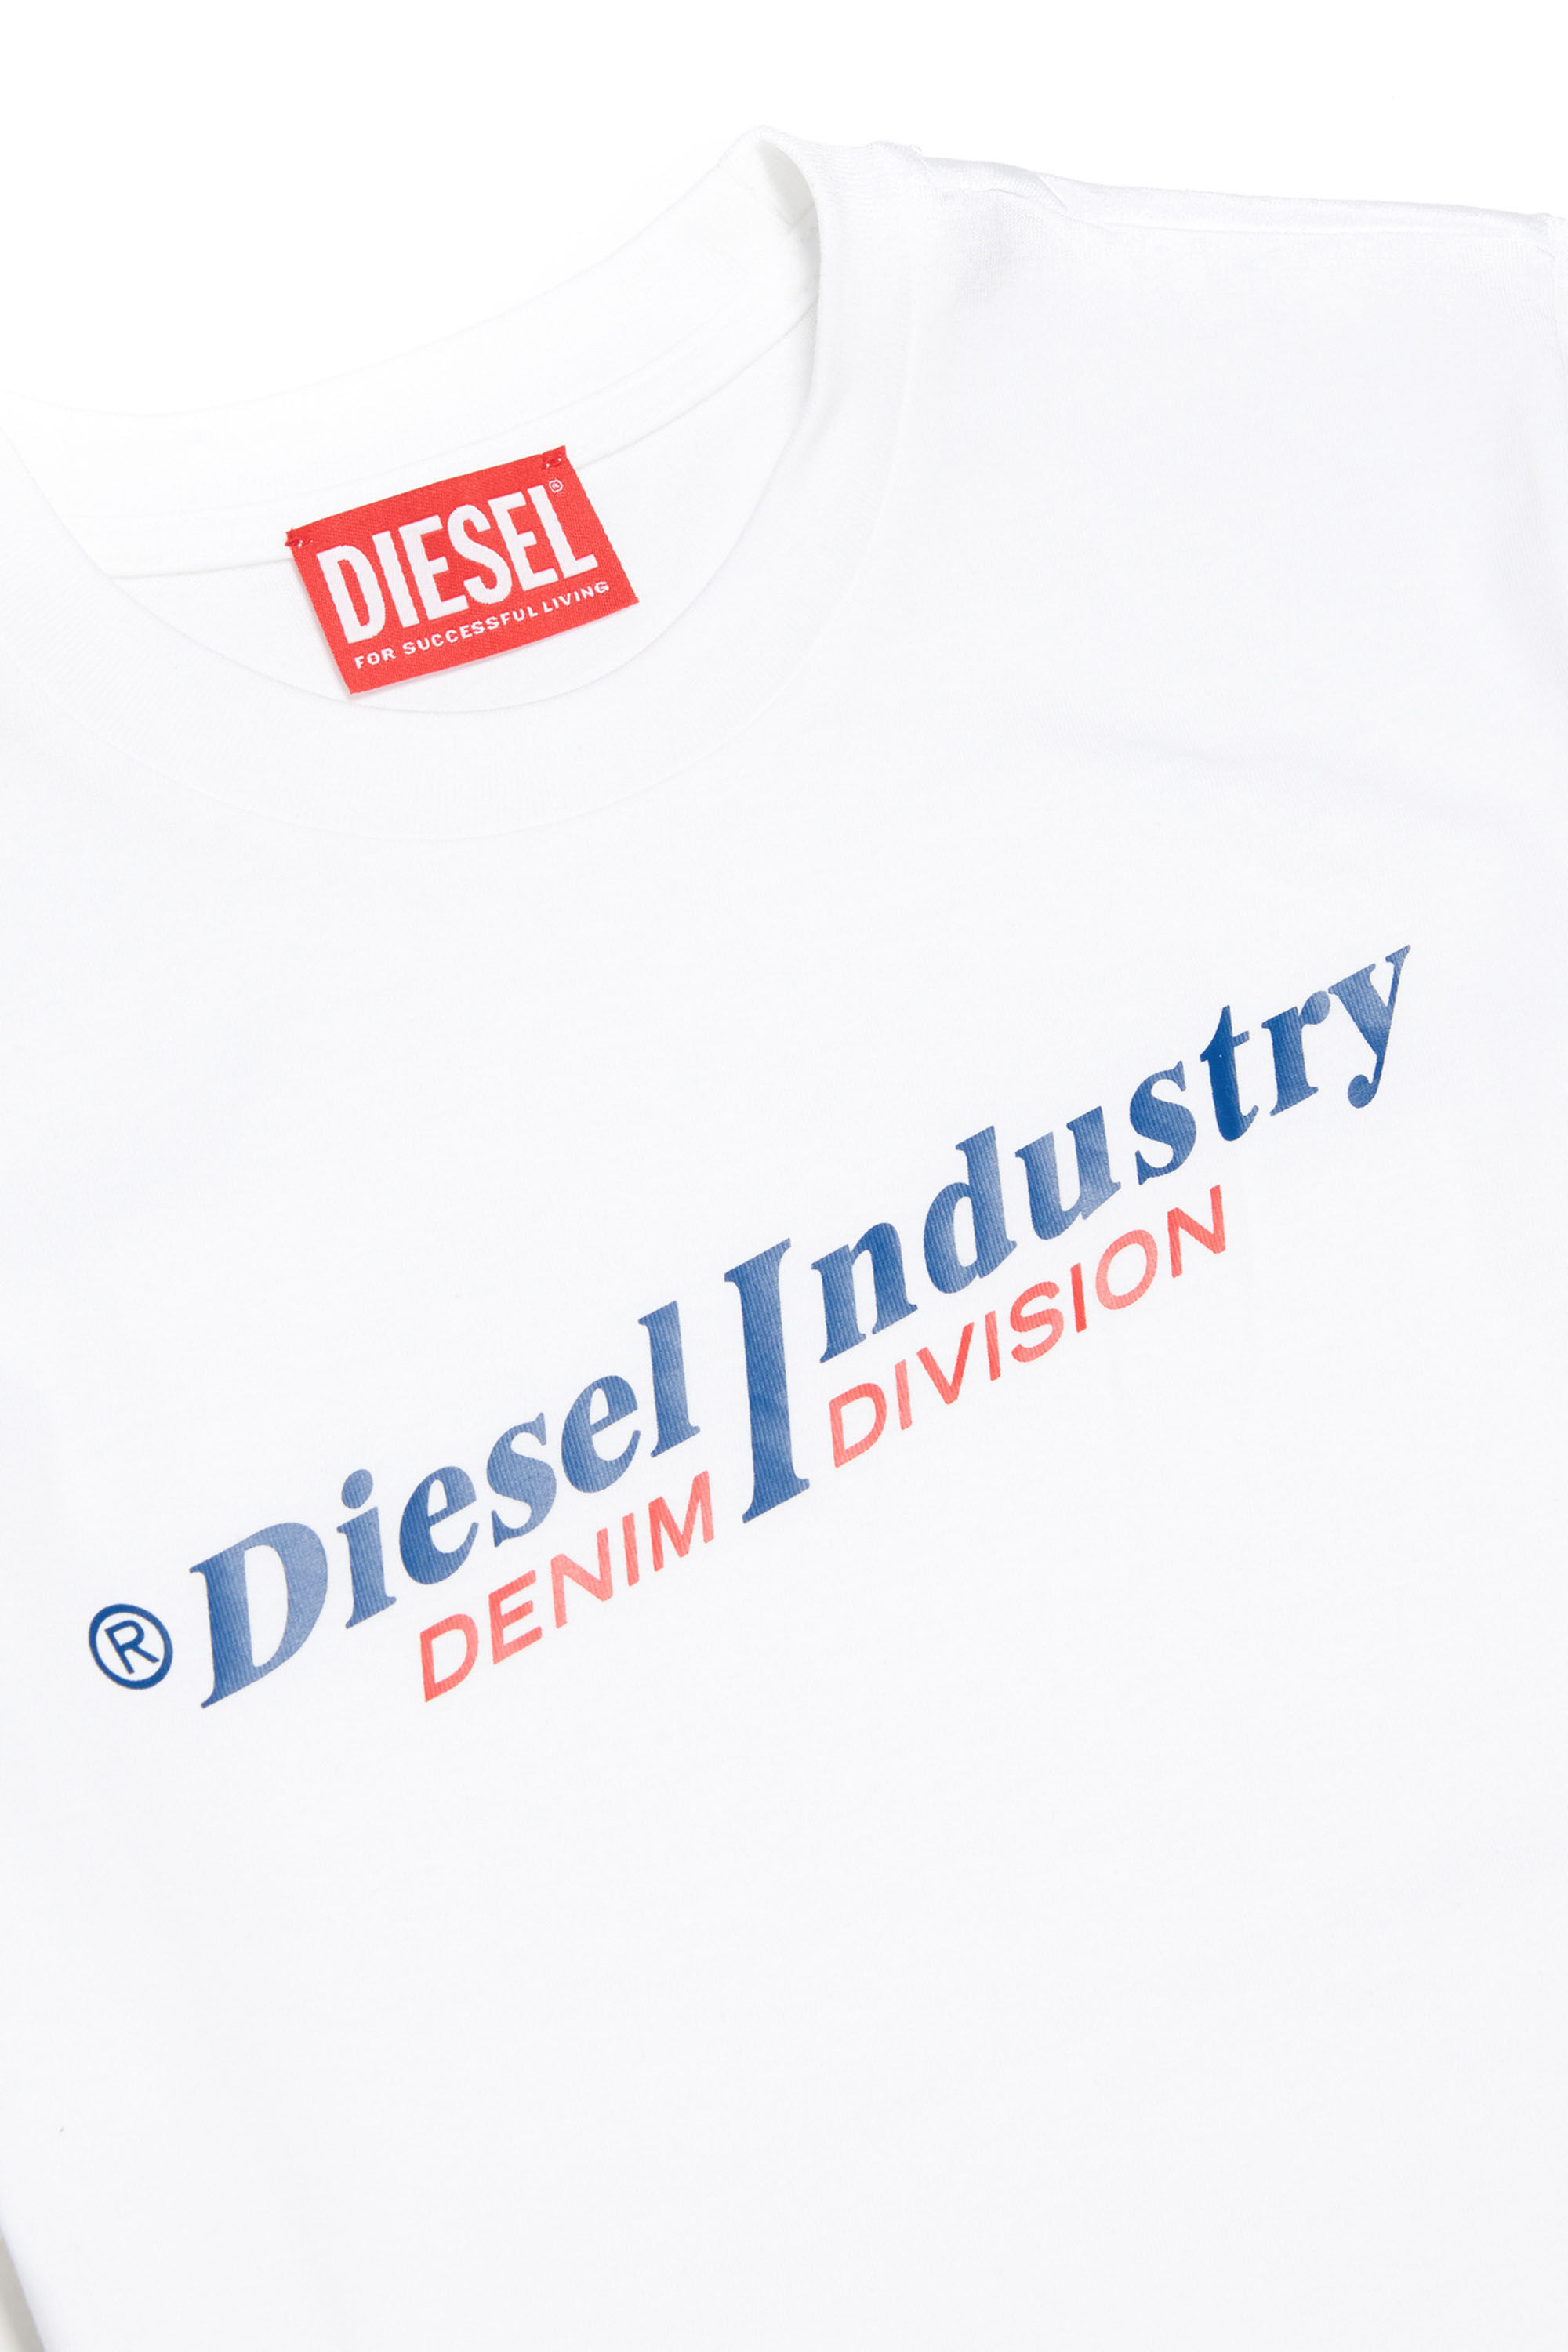 TDIEGORIND Boy: T-shirt with Diesel Industry logo | Diesel